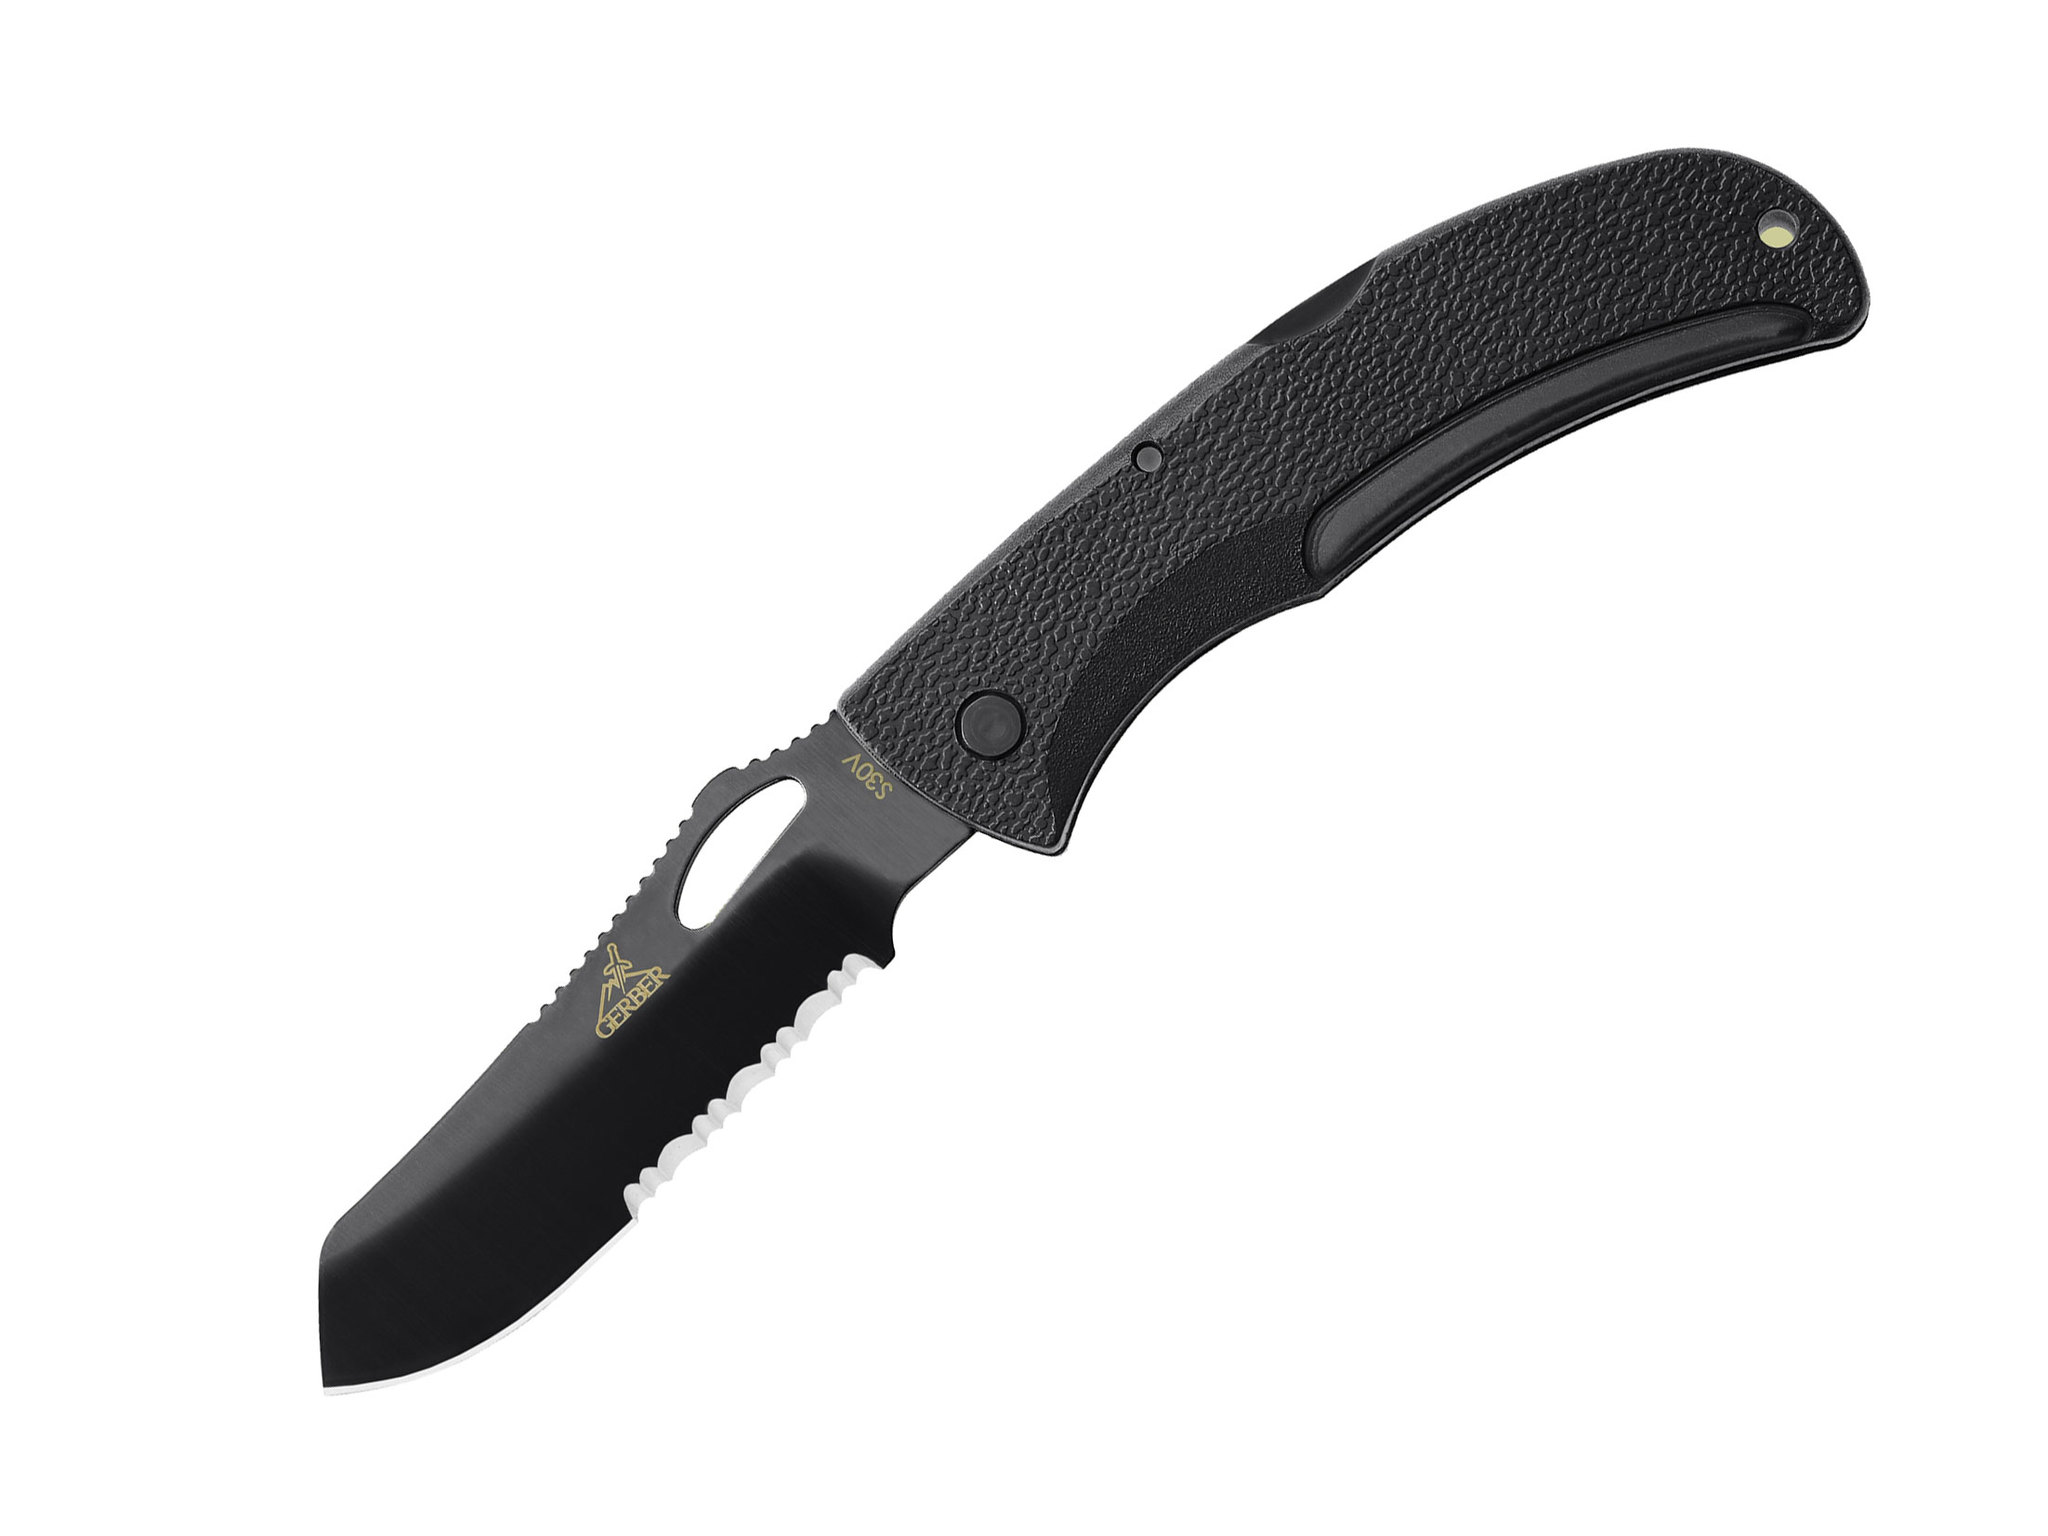 Складной нож Gerber E-Z Out Black, сталь CPM-S30V, рукоять термопластик GRN нож gerber bear grylls compact fixed blade сталь 7cr17mov рукоять полиамид